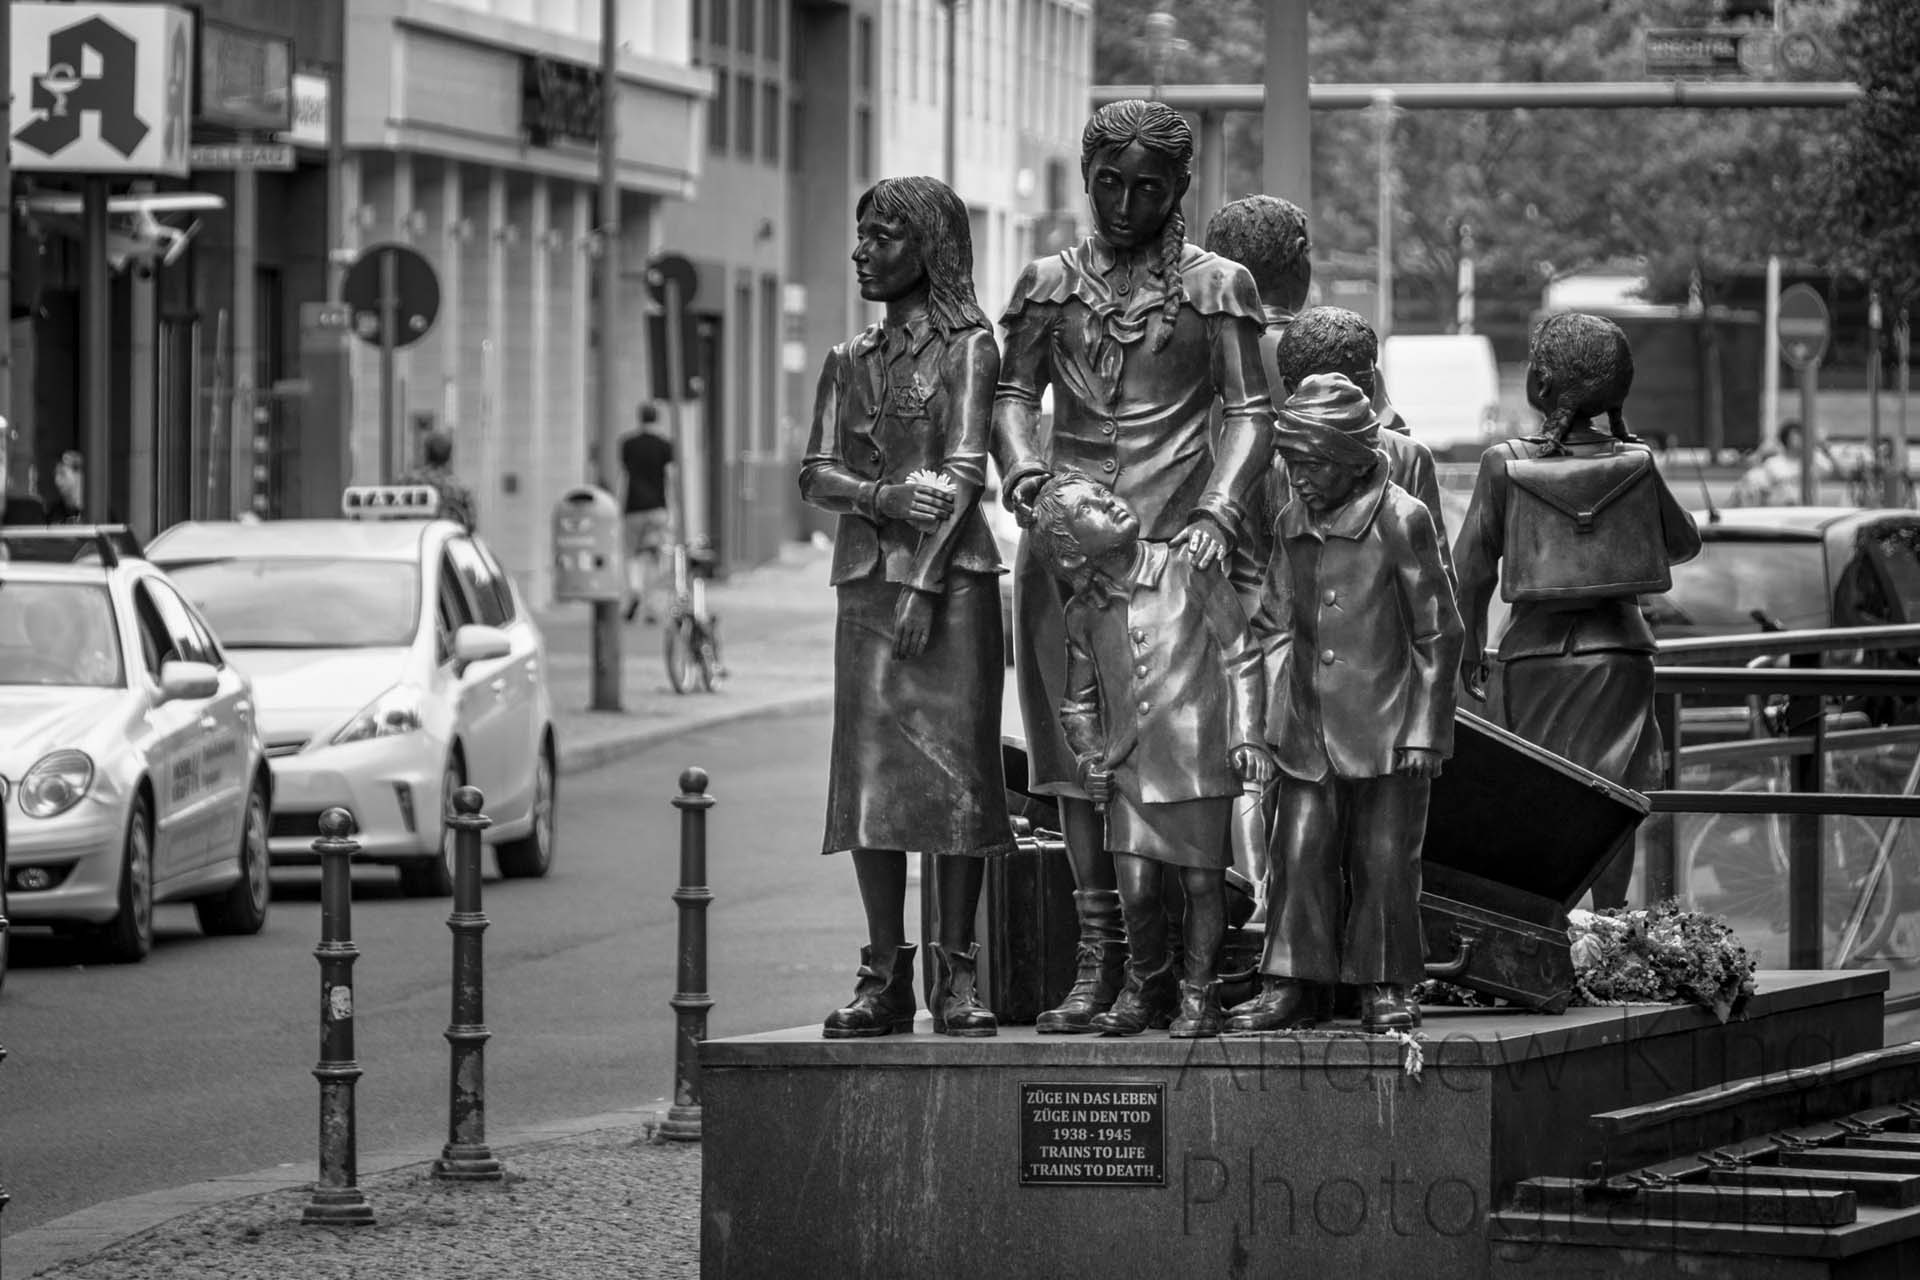 Kindertransport Frank Meisler Berlin Statue Sculpture trains to life trains to death friedrichstrasse bahnhof133213